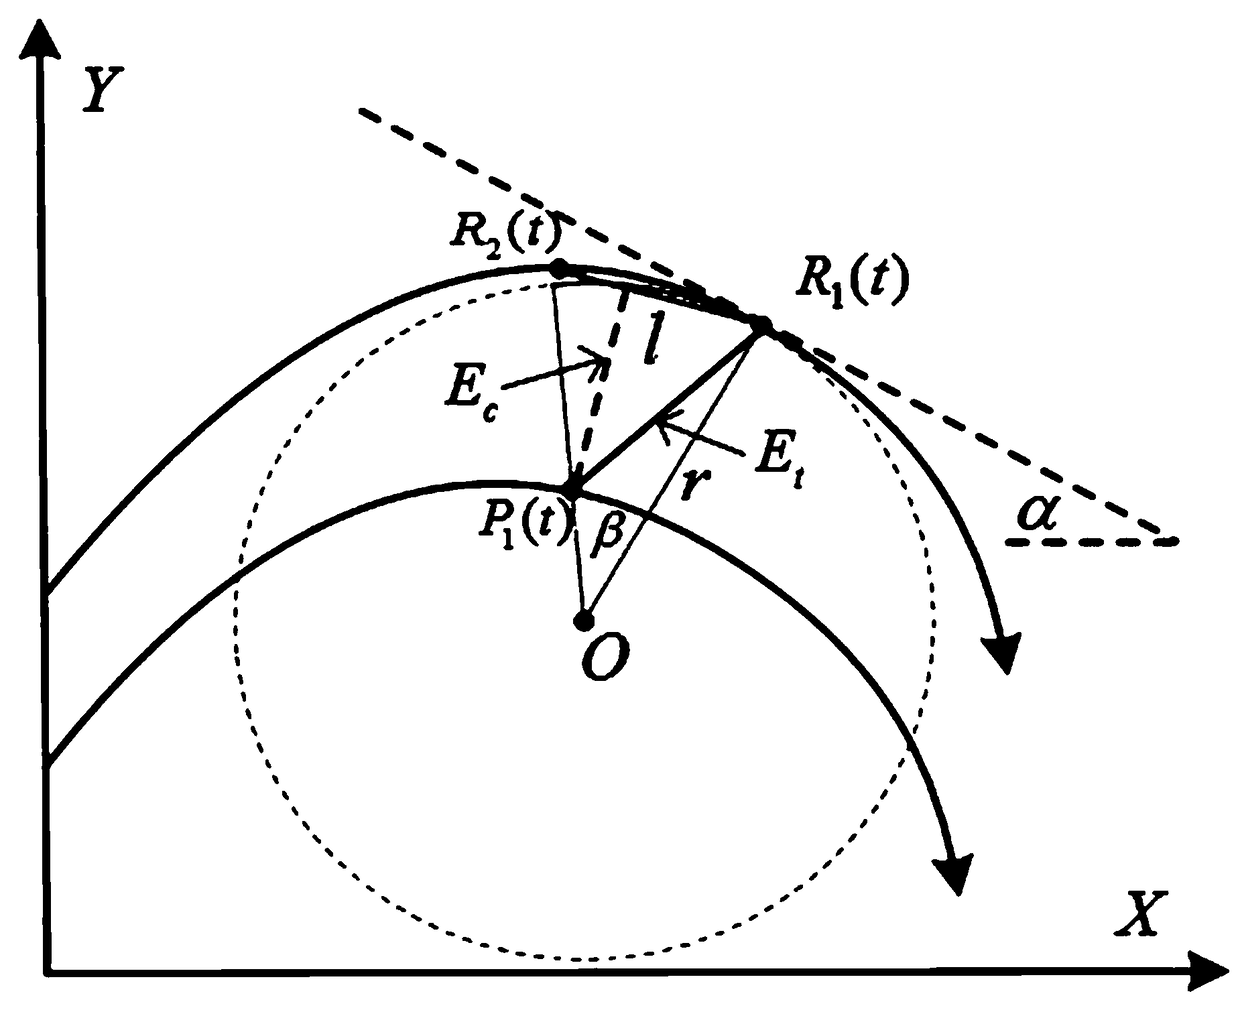 Contour error estimation method based on H-shaped precision movement platform